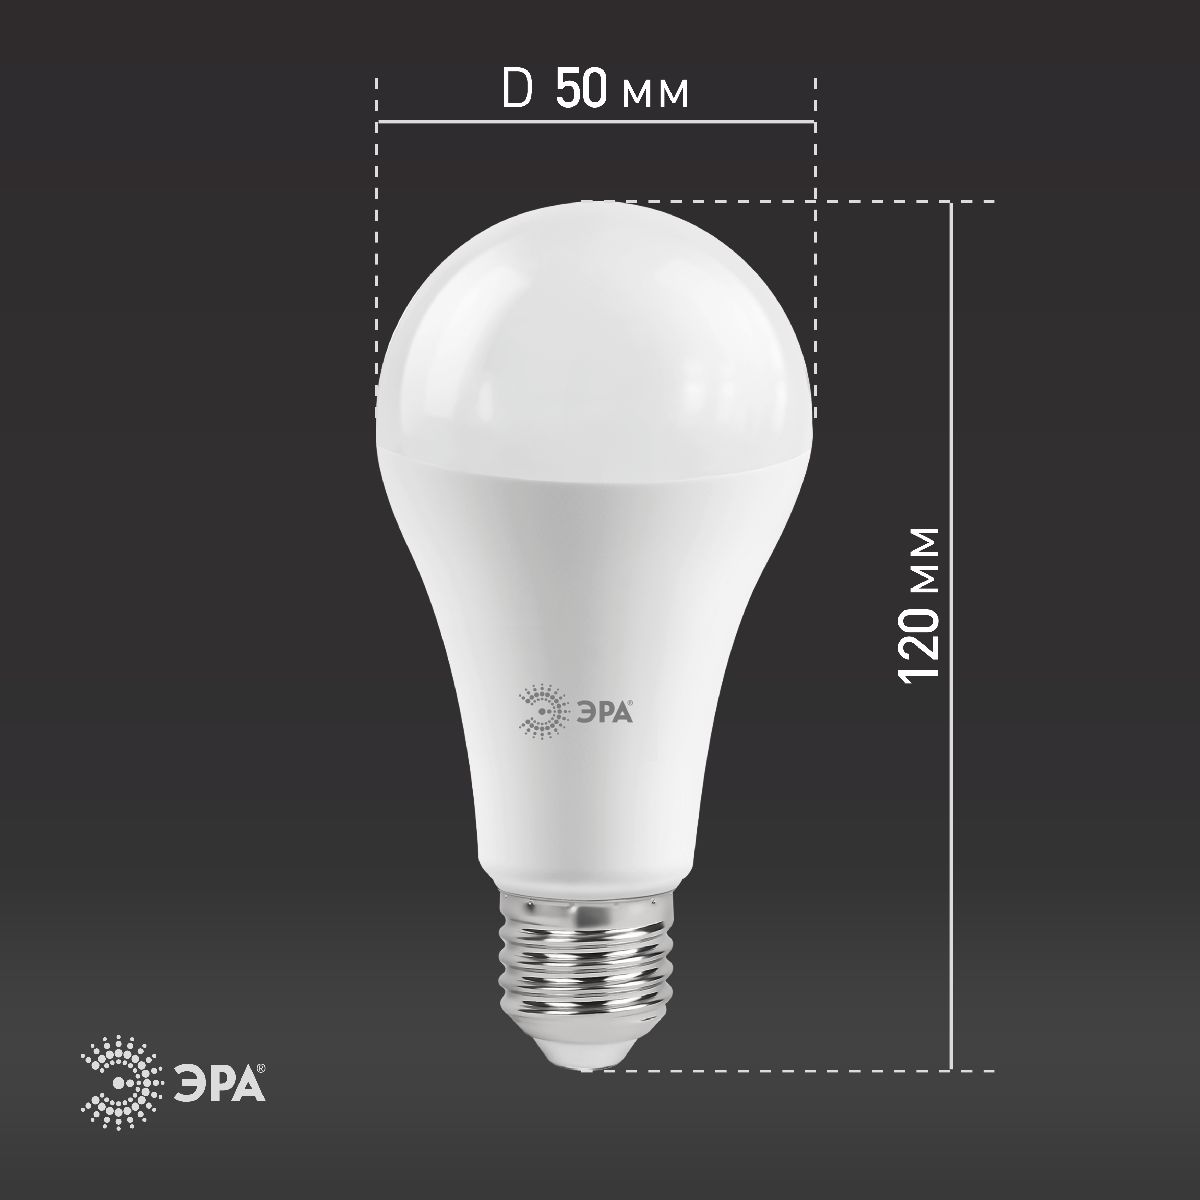 Лампа светодиодная Эра E27 30W 2700K LED A65-30W-827-E27 Б0048015